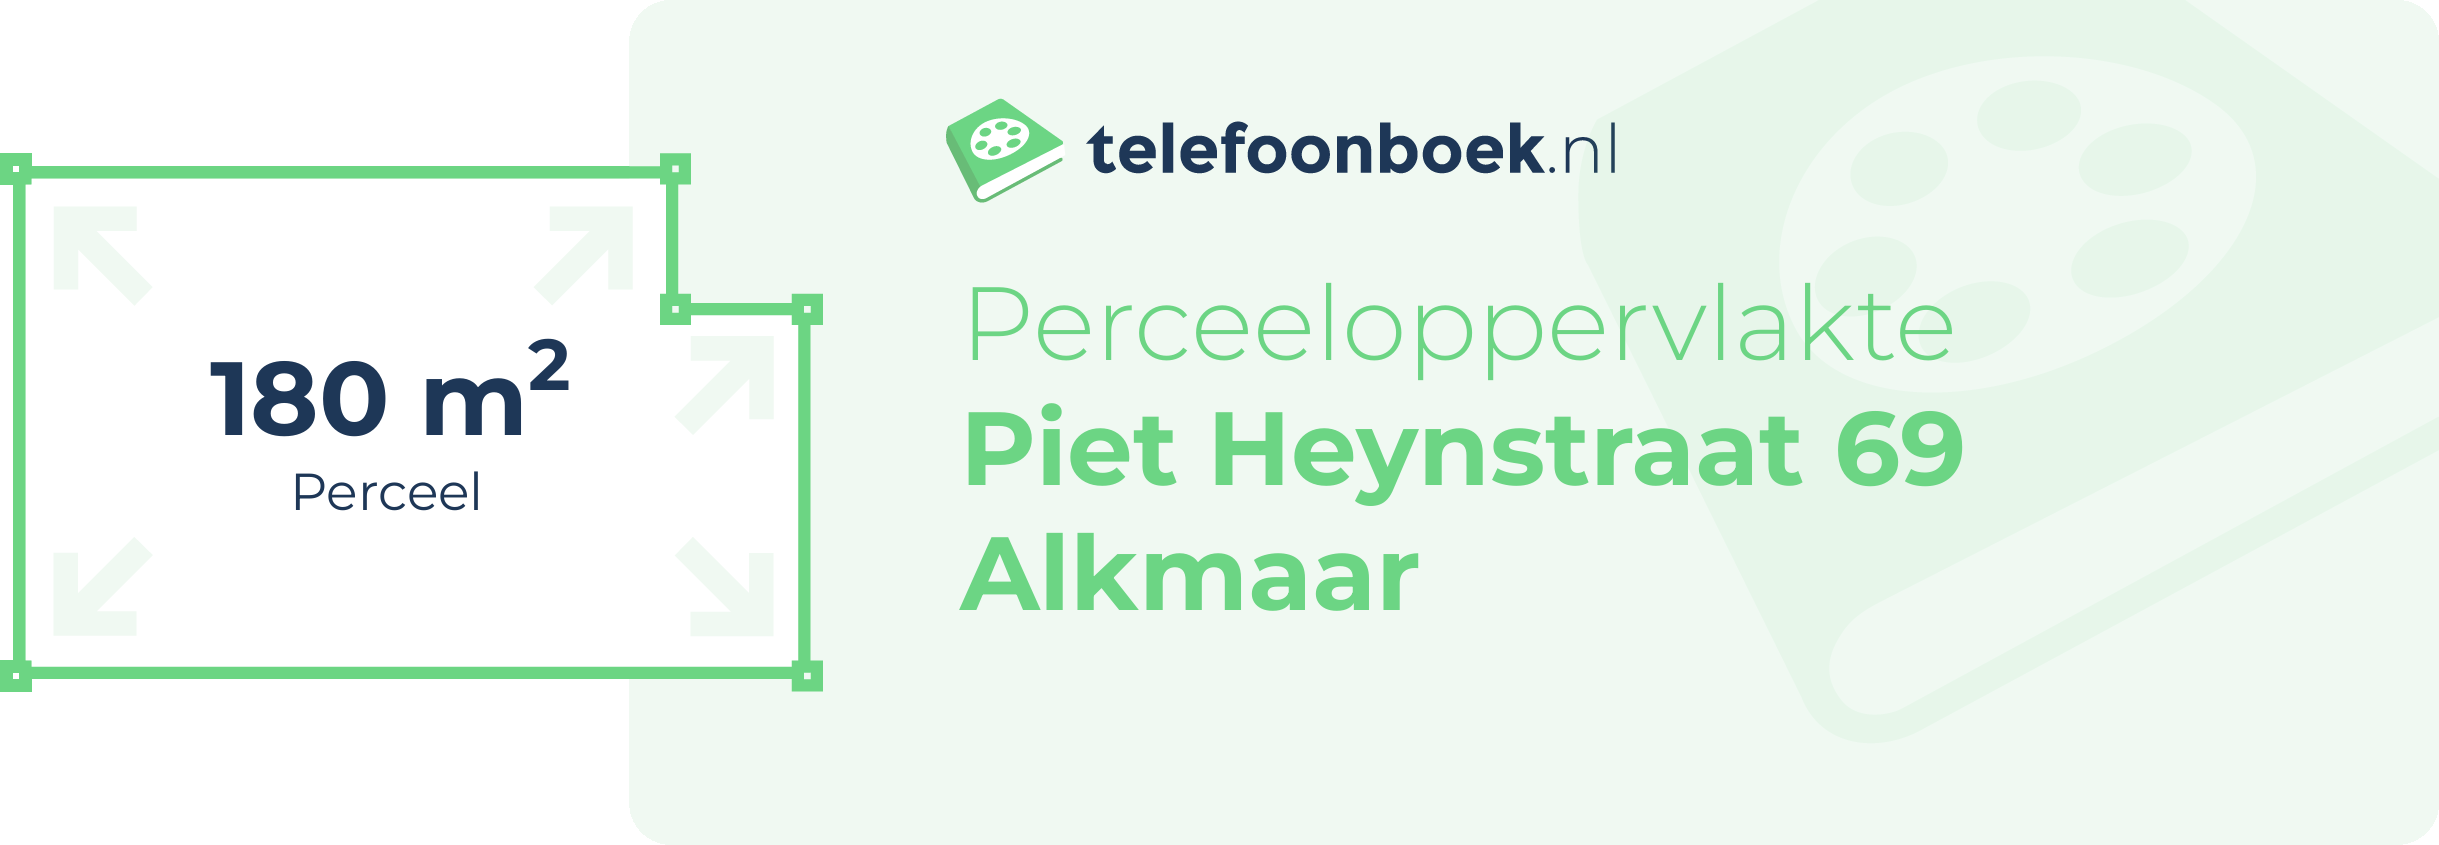 Perceeloppervlakte Piet Heynstraat 69 Alkmaar